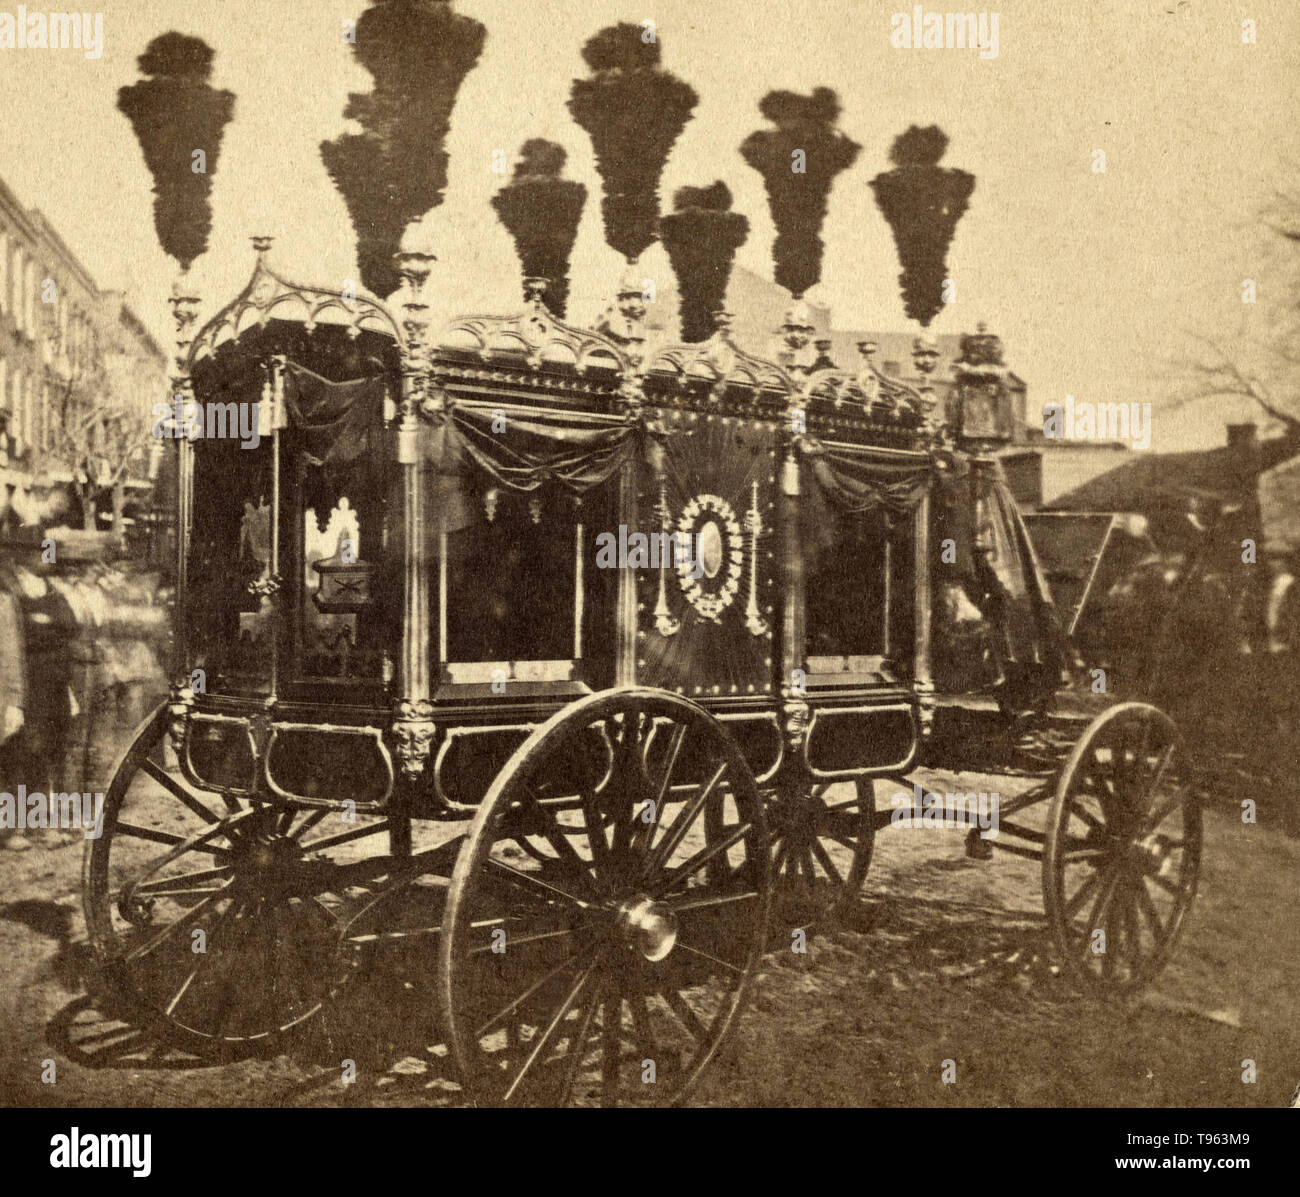 Abraham Lincoln's funeral wagon. Samuel Montague Fassett, photographer (American, born Canada, 1825 - 1910). Albumen silver print, 1865. Stock Photo